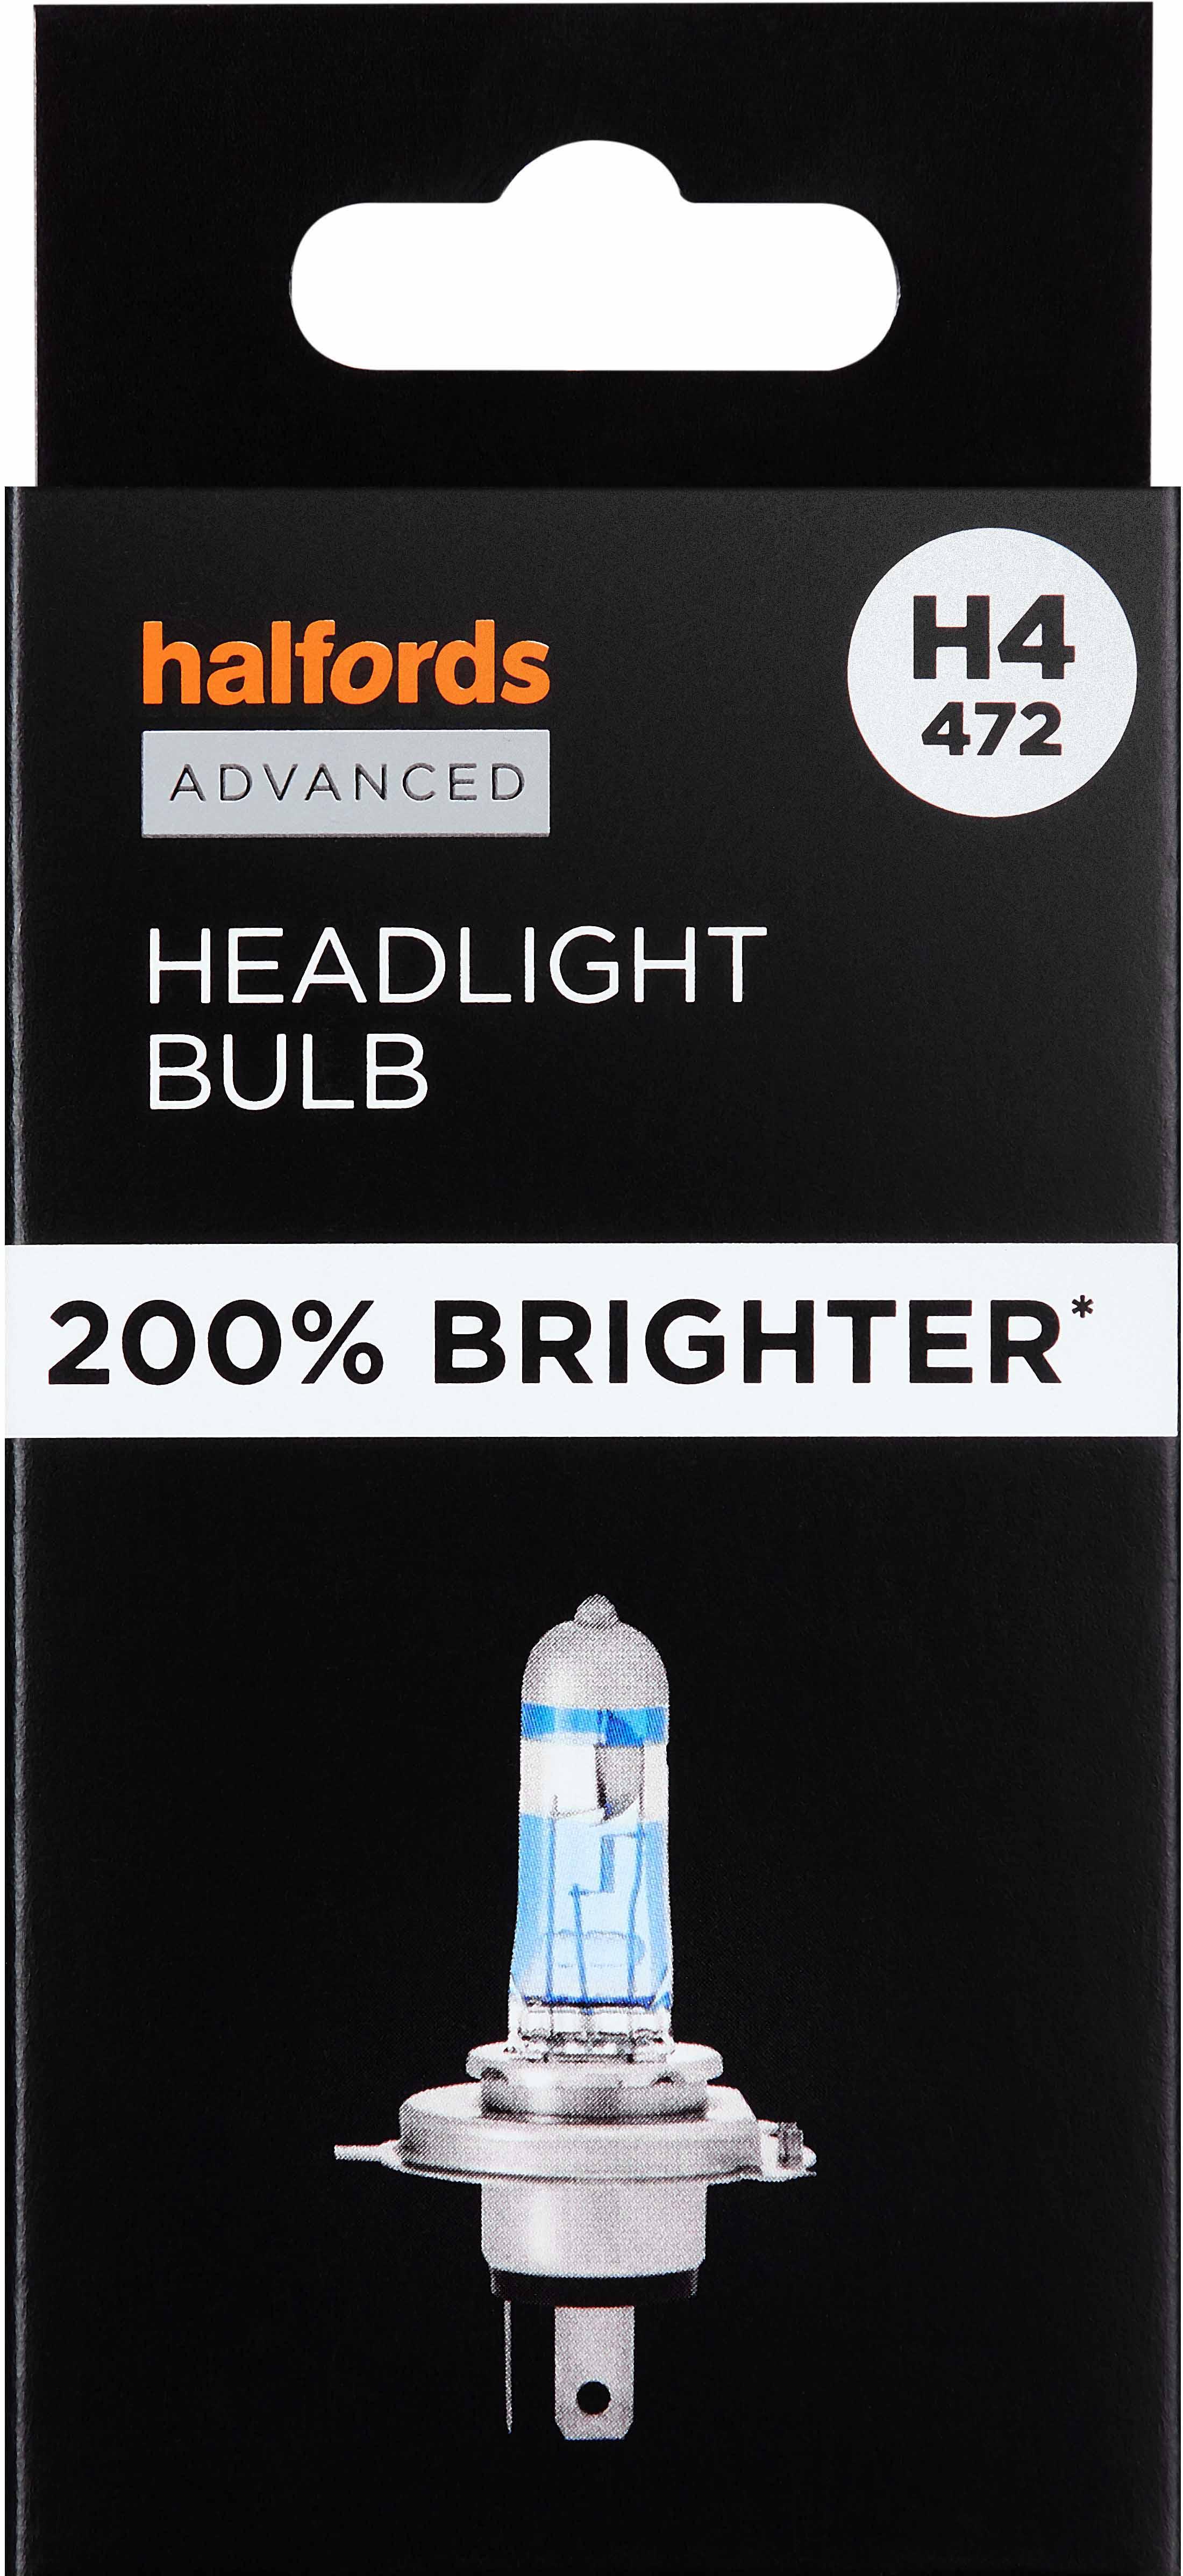 Halfords Advanced +200% Brighter H4 472 Headlight Bulb